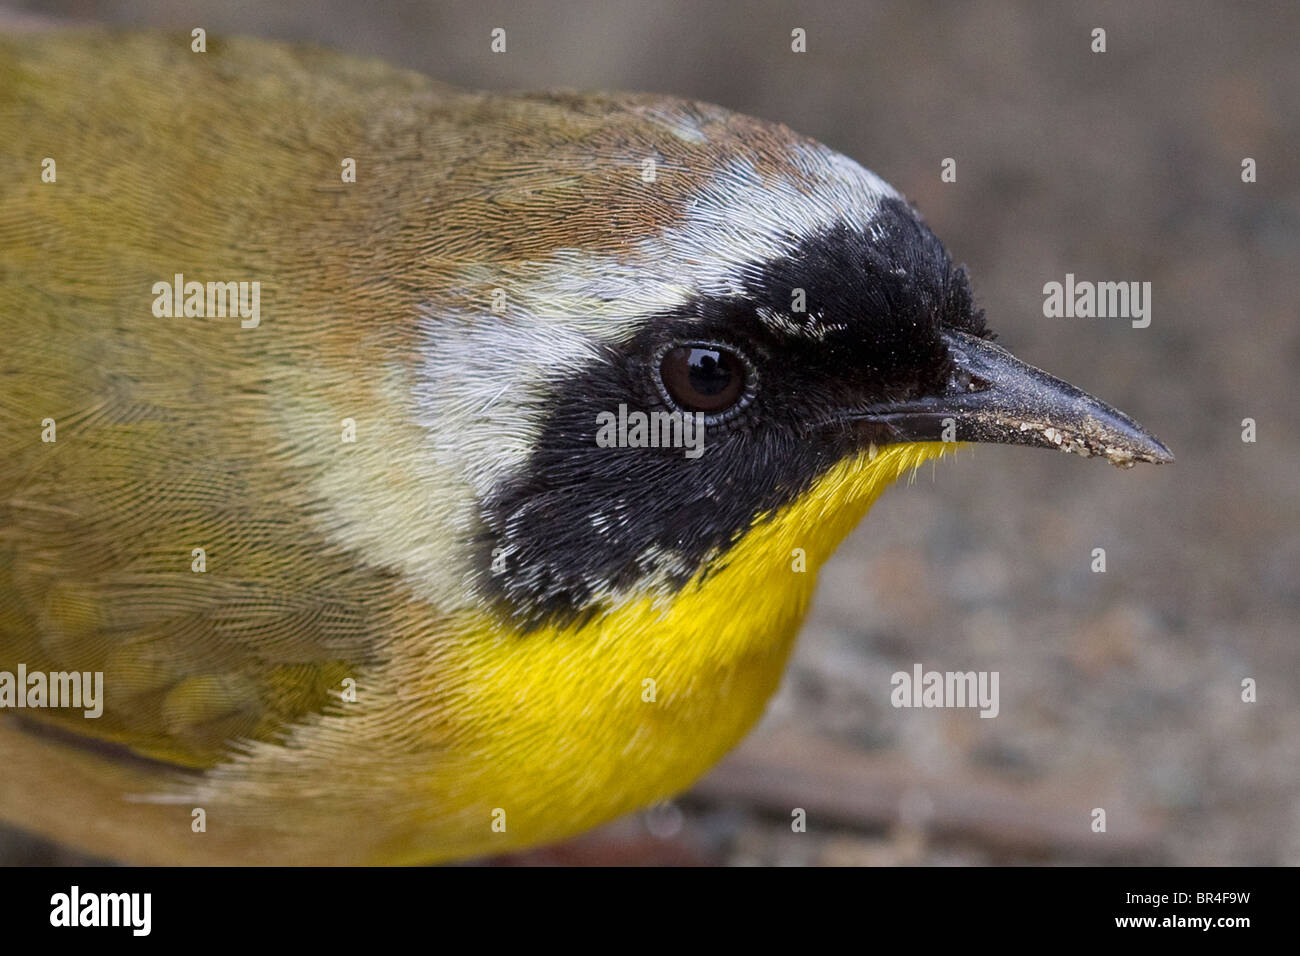 Common Yellowthroat, Geothlypis trichas, bird close up Stock Photo